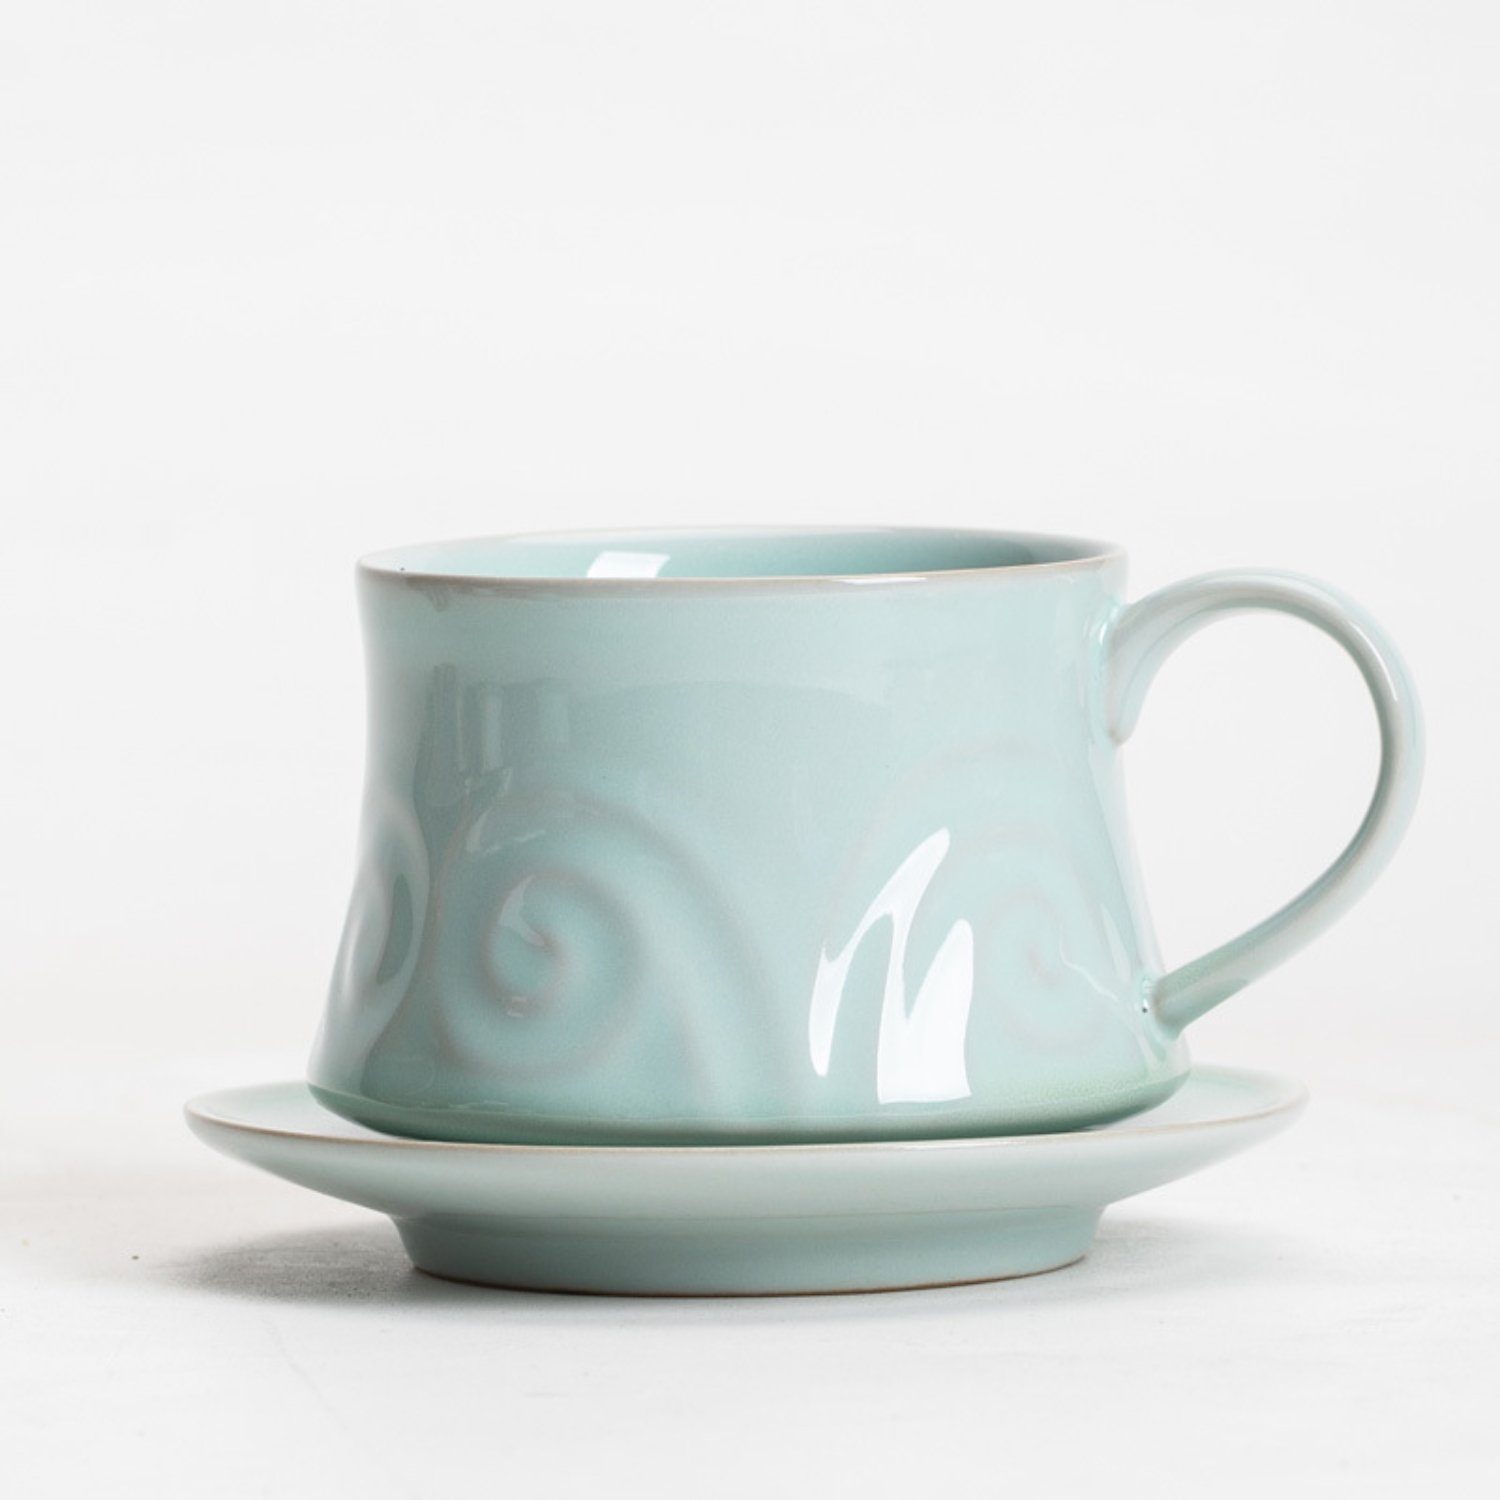 HOMEIDEAS Tasse, Keramik, Kaffeetasse aus Porzellan, Tasse Steingut, Vintage Hellgrün | Tassen